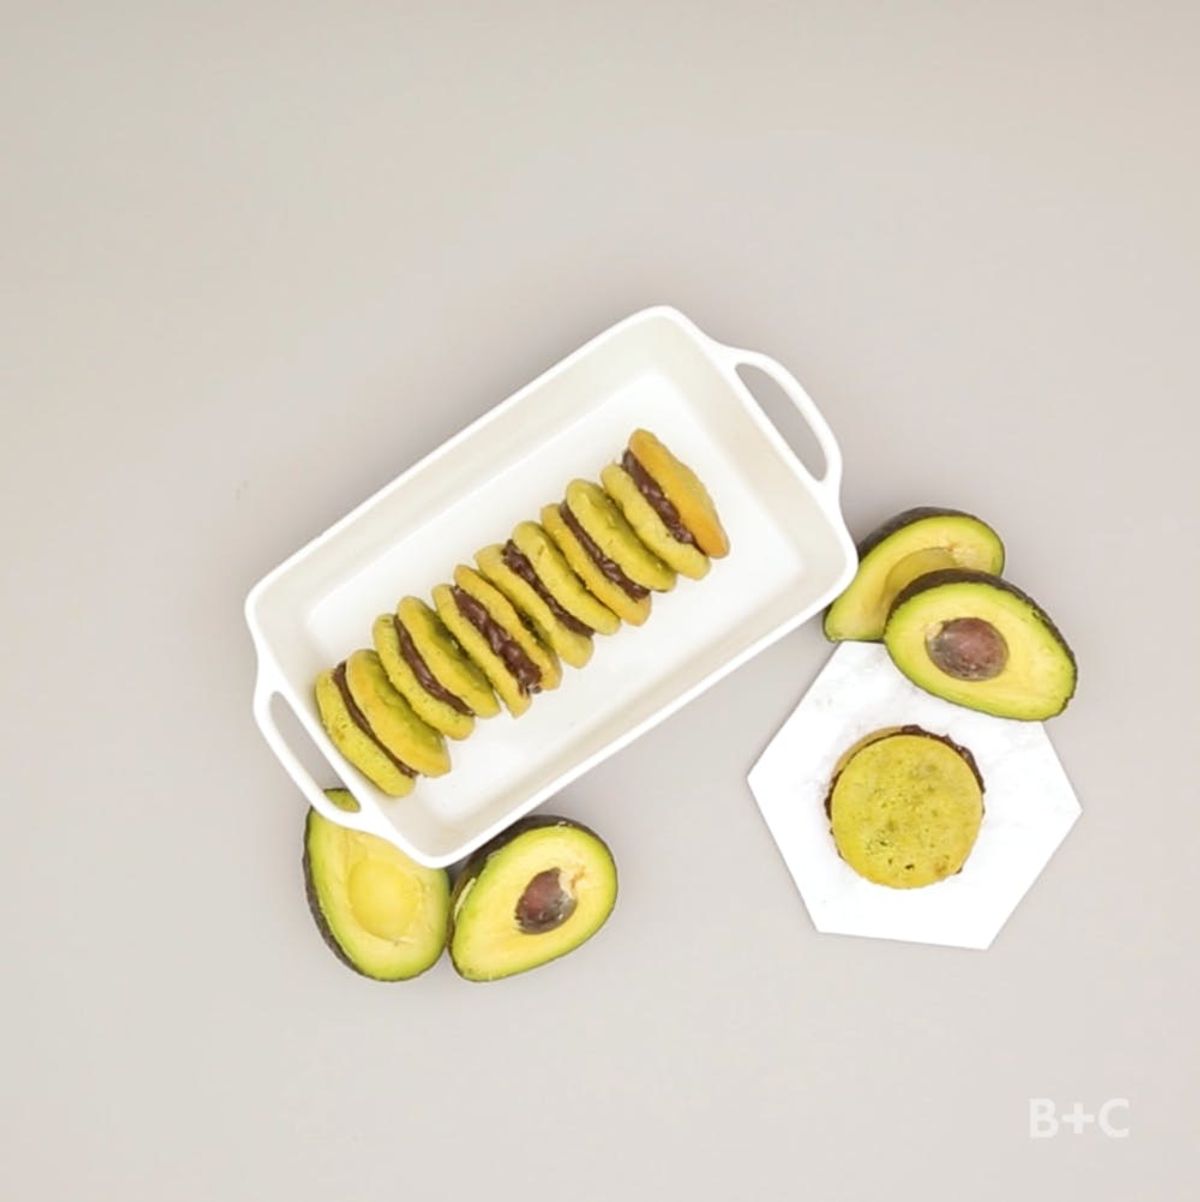 How to DIY Avocado Whoopie Pies